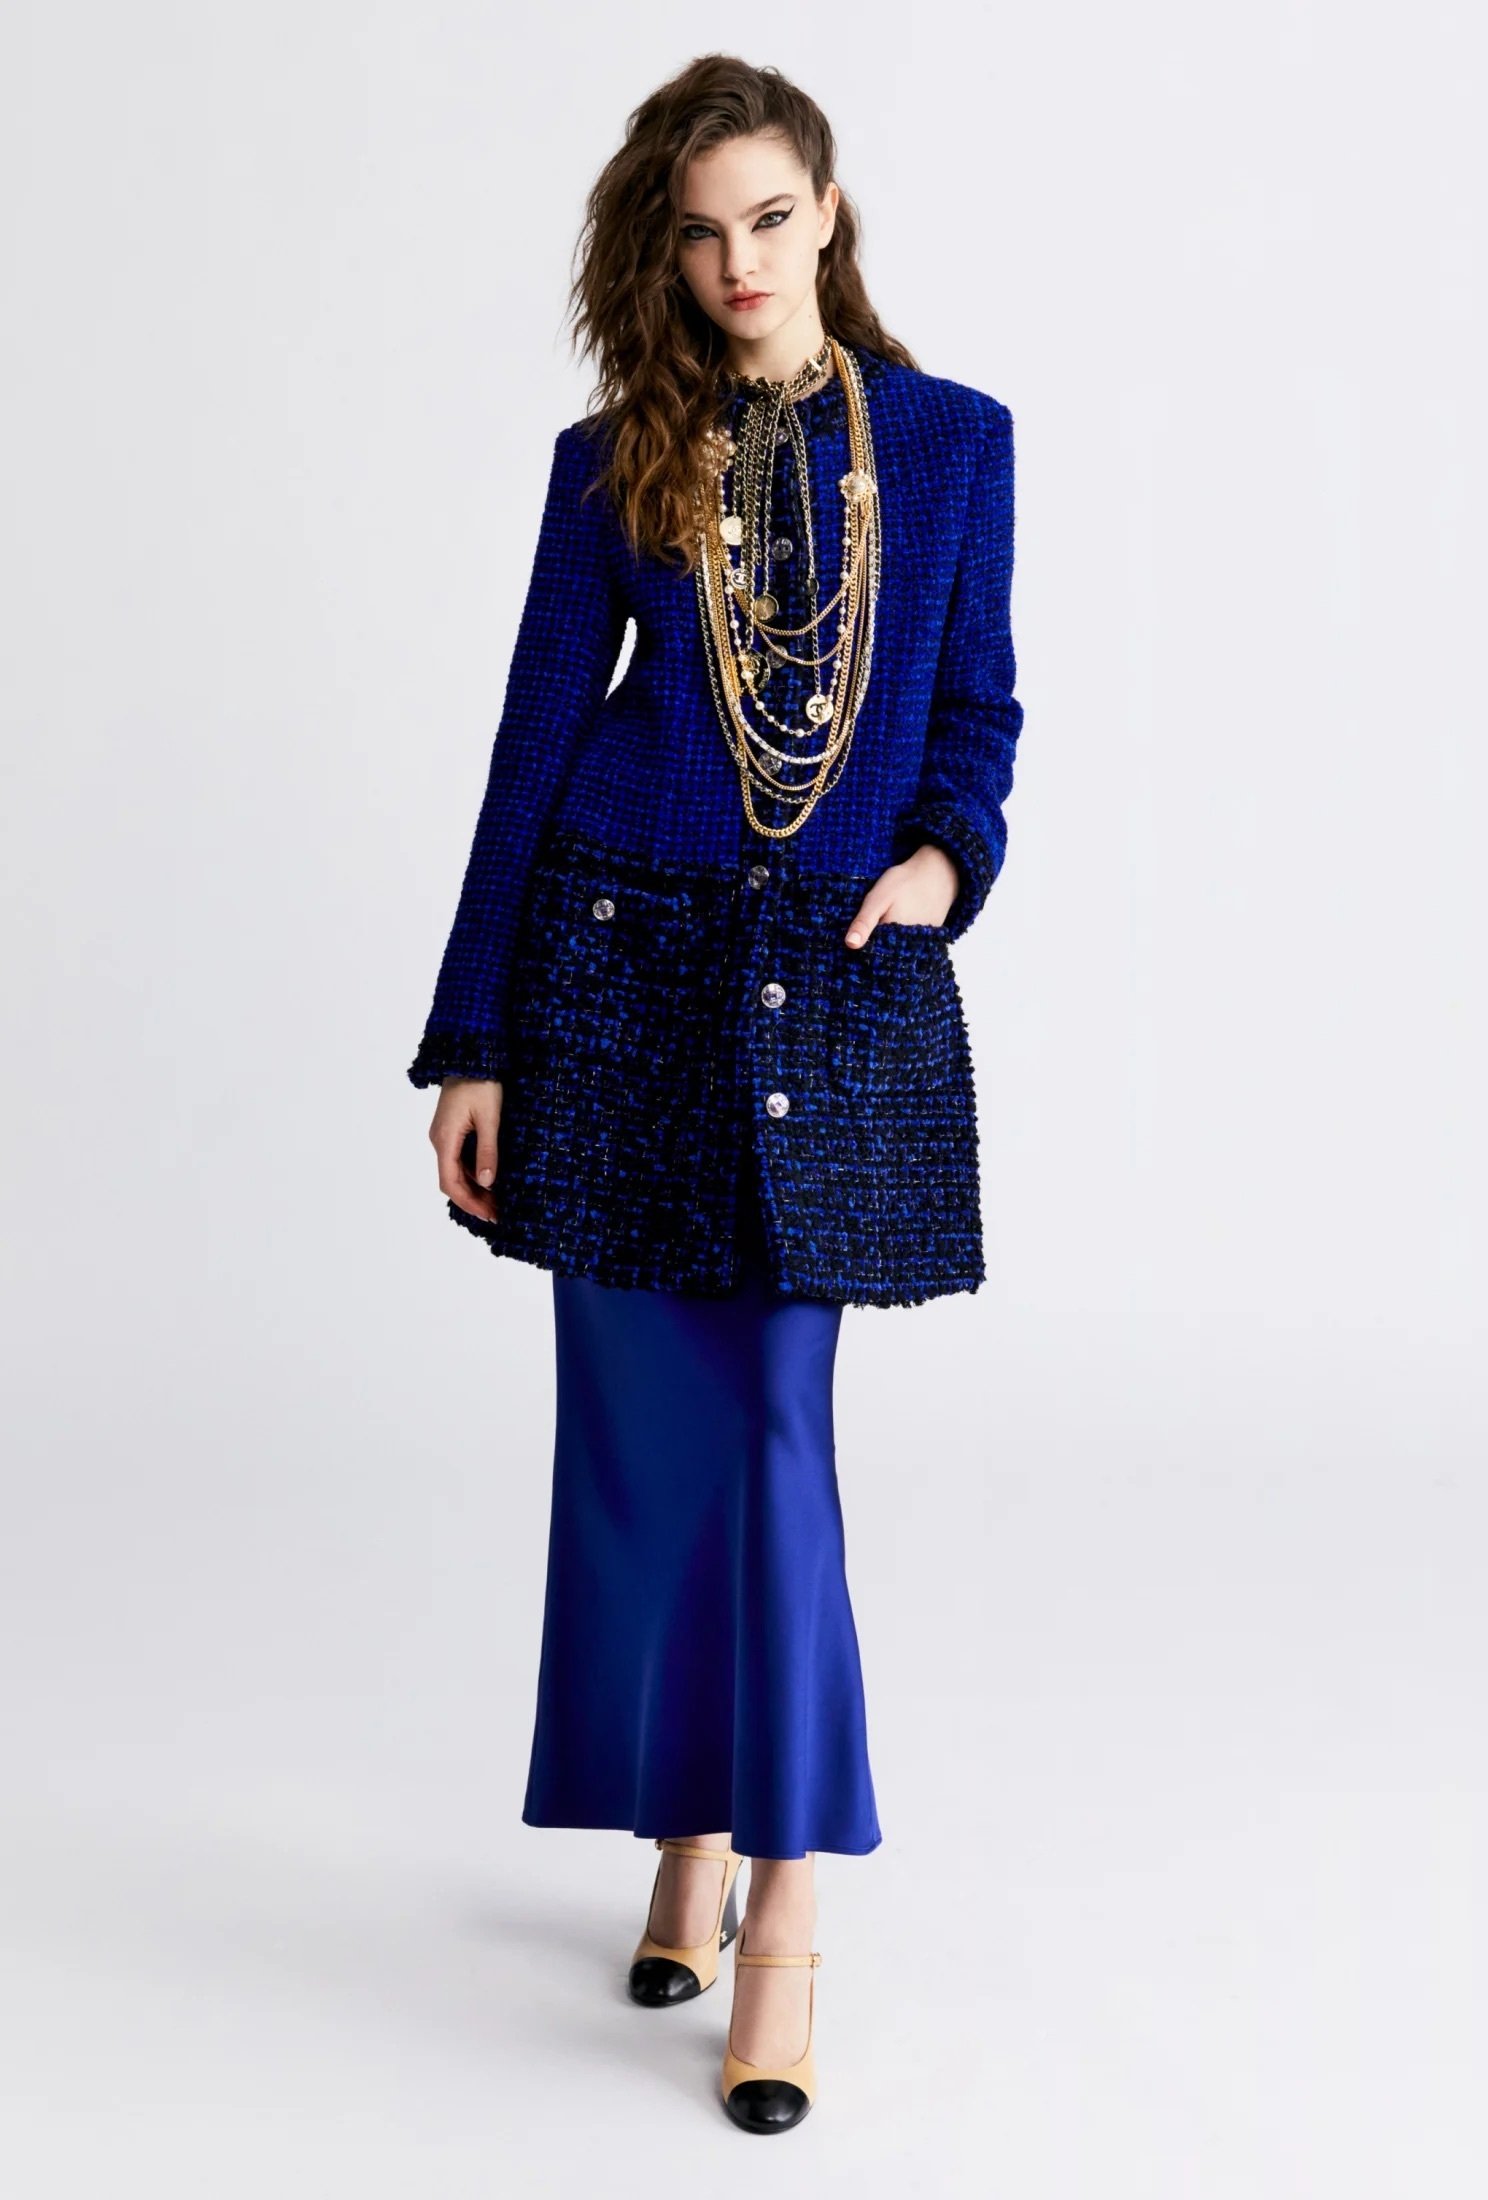 Chanel Silk Midi Skirt in Blue.jpg